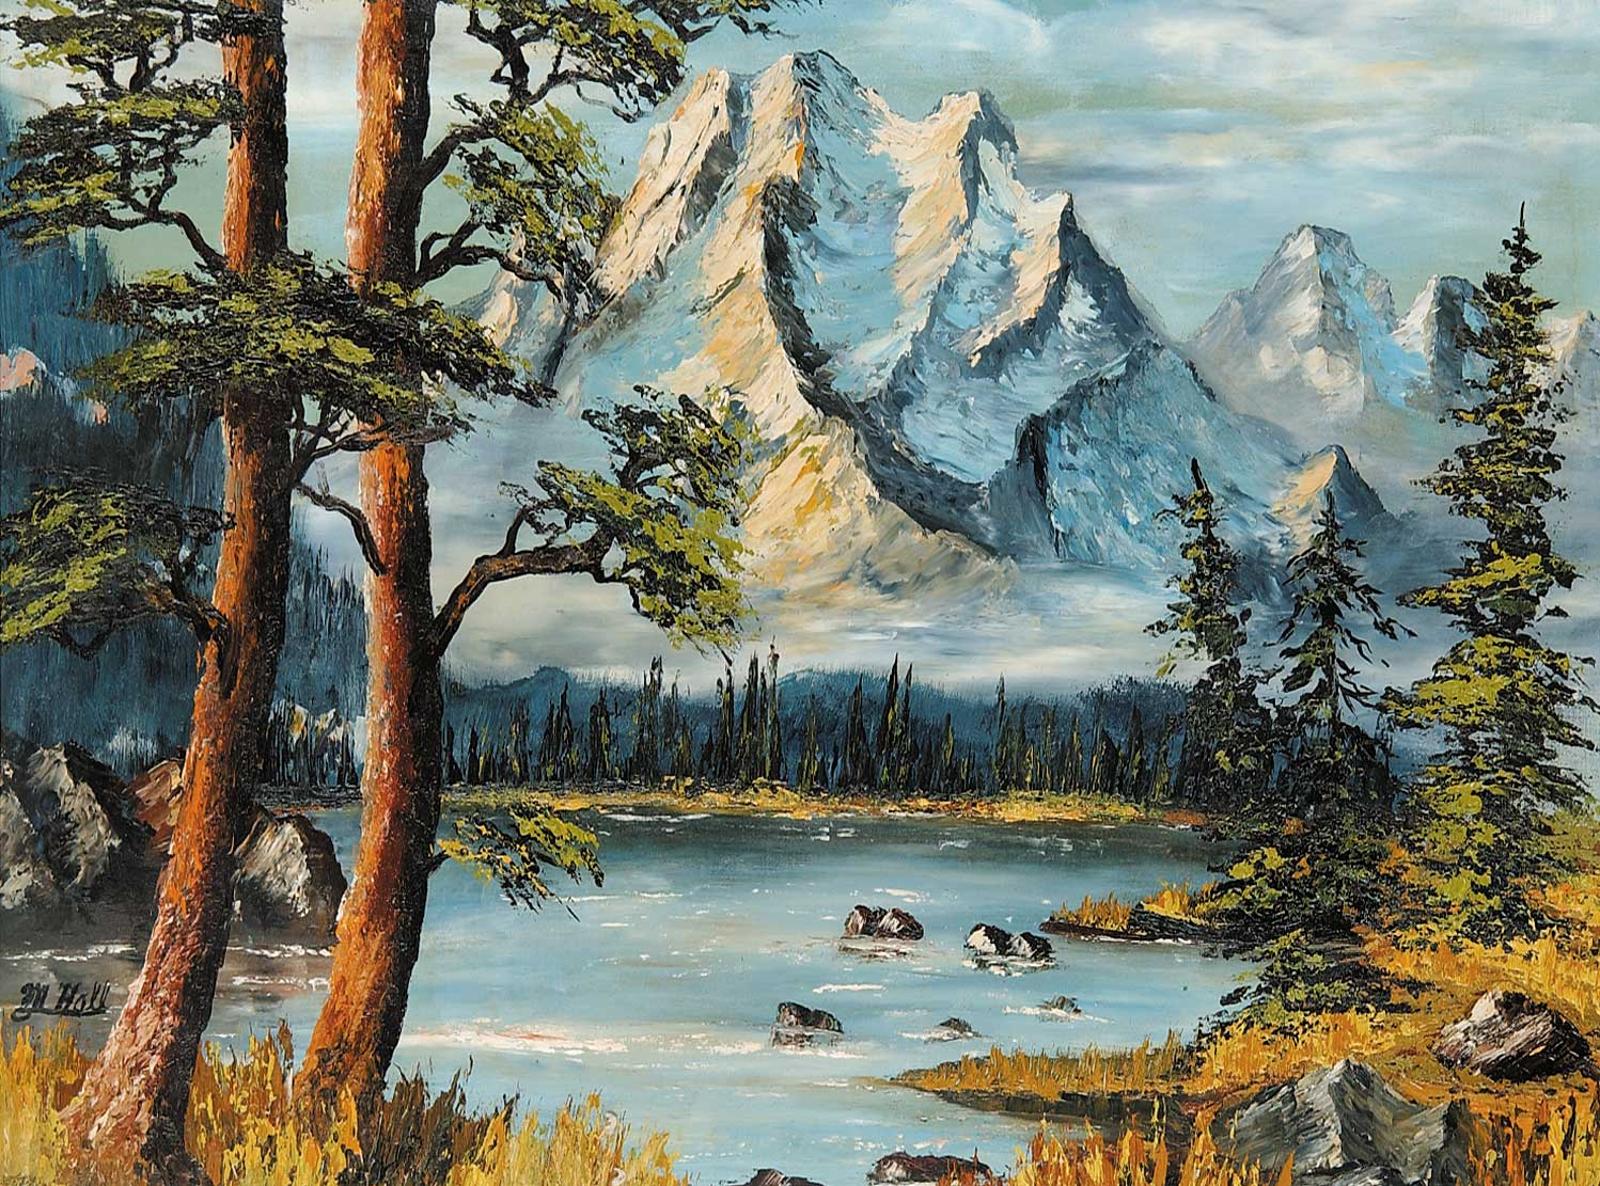 J.M. Hall - Untitled - Mountain Stream